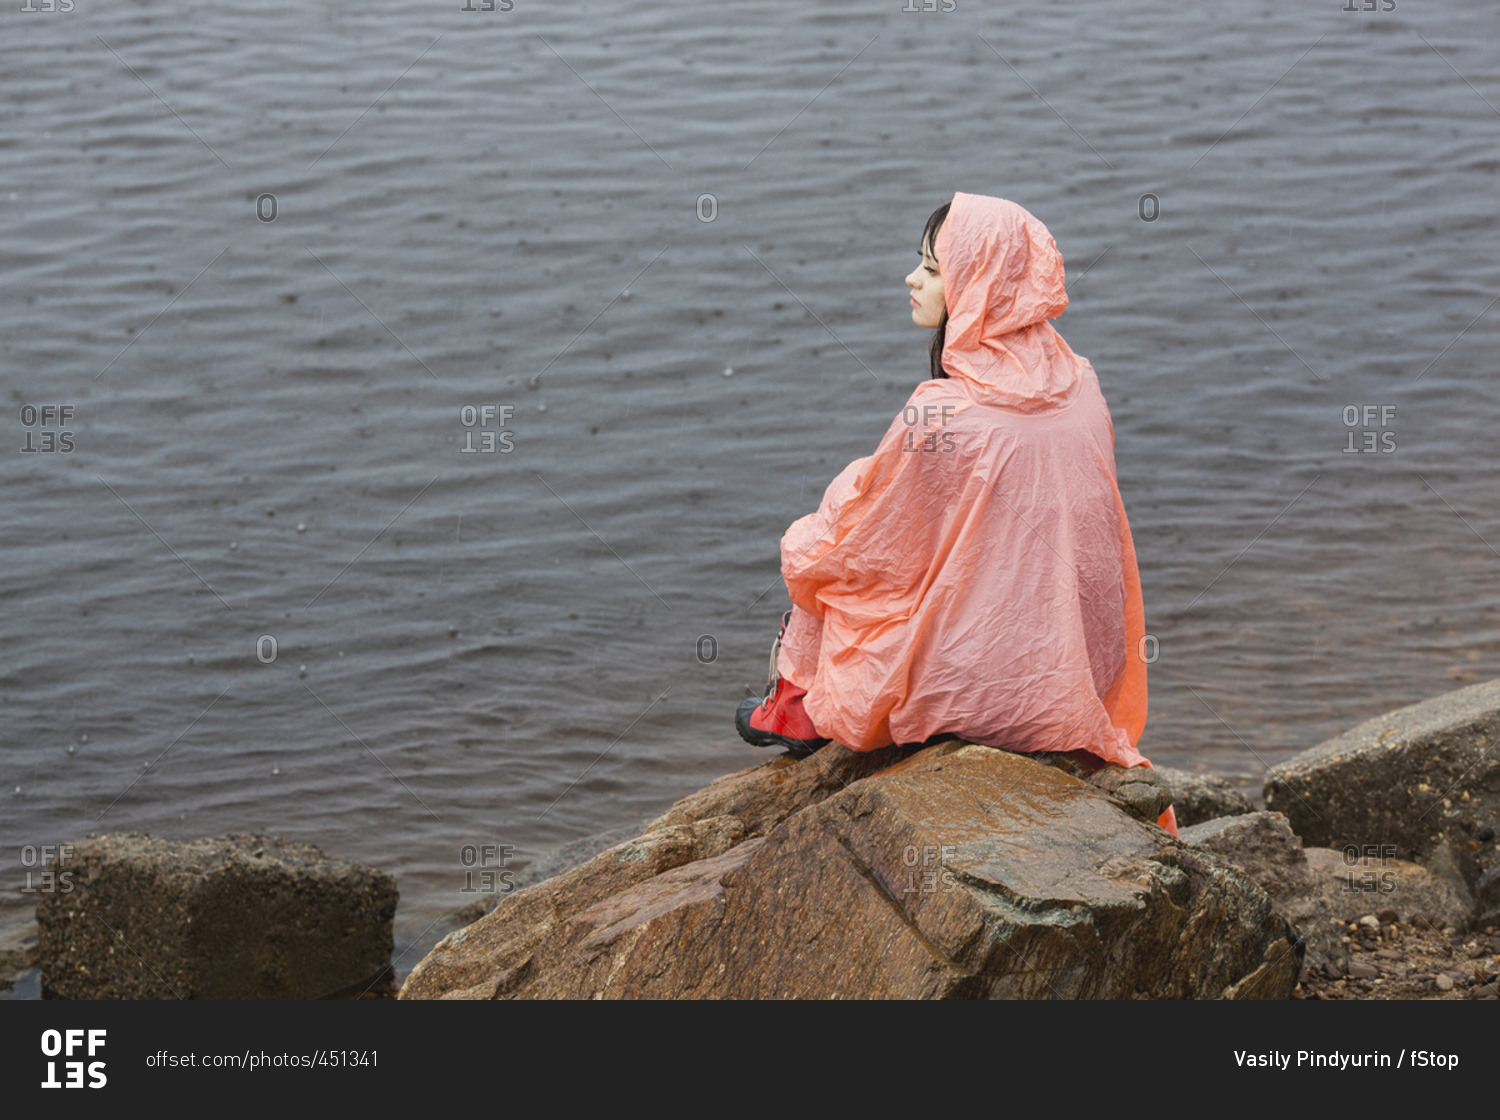 Thoughtful woman wearing raincoat sitting on rock at lakeshore during rainy season